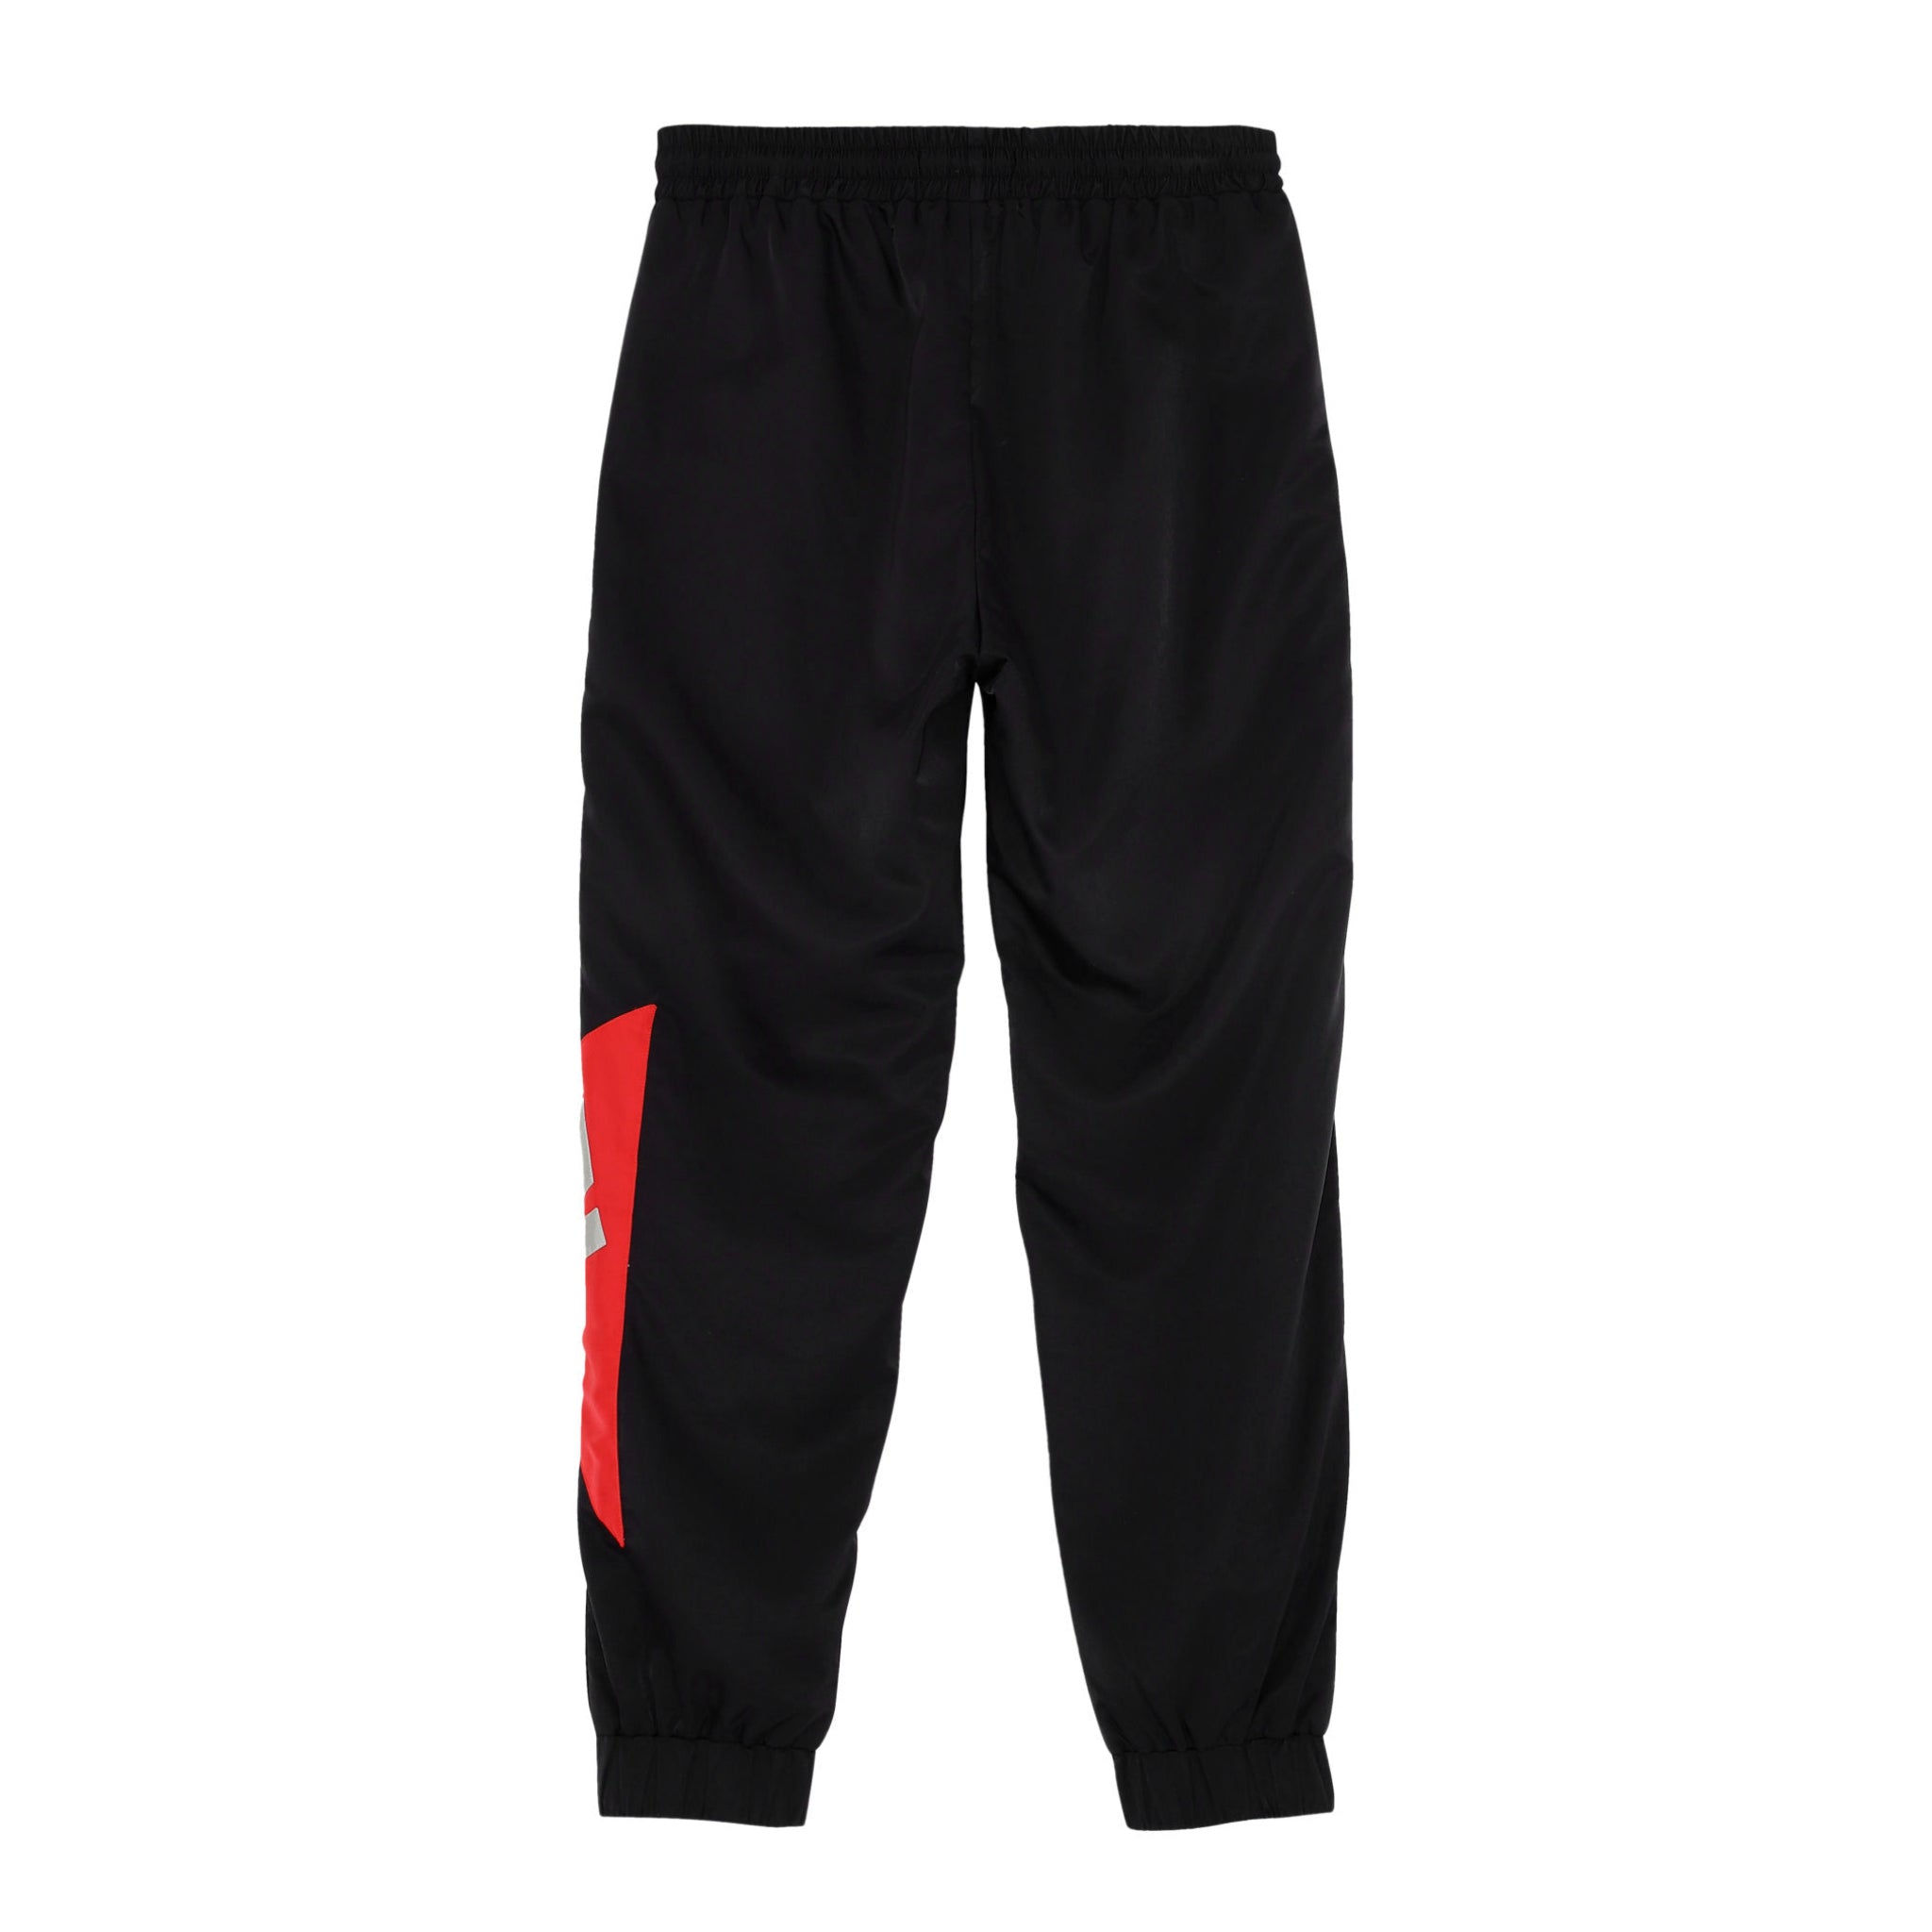 Han Kjobenhavn Track pants Black/Red/White